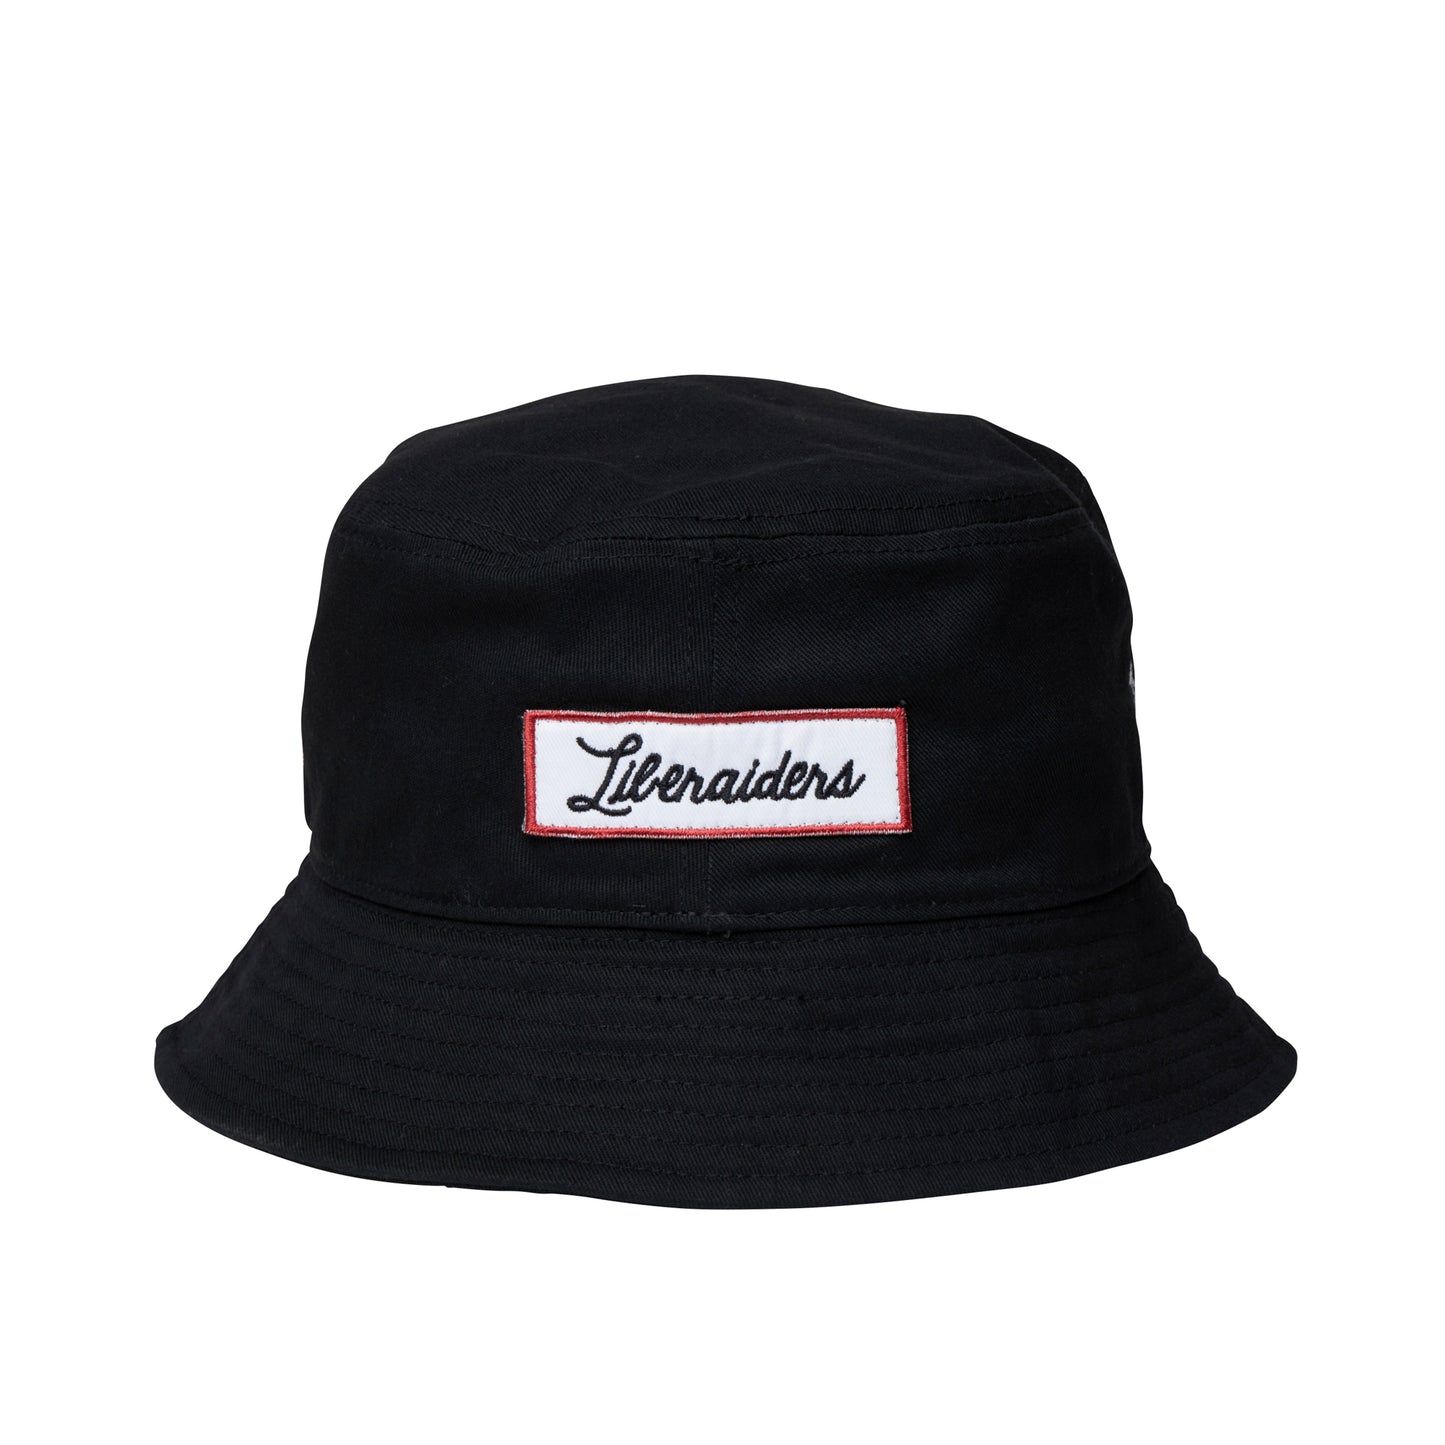 Liberaiders ® (リベレイダース)/ CHAMPIONSHIP BUCKET HAT 70902 / BLACK